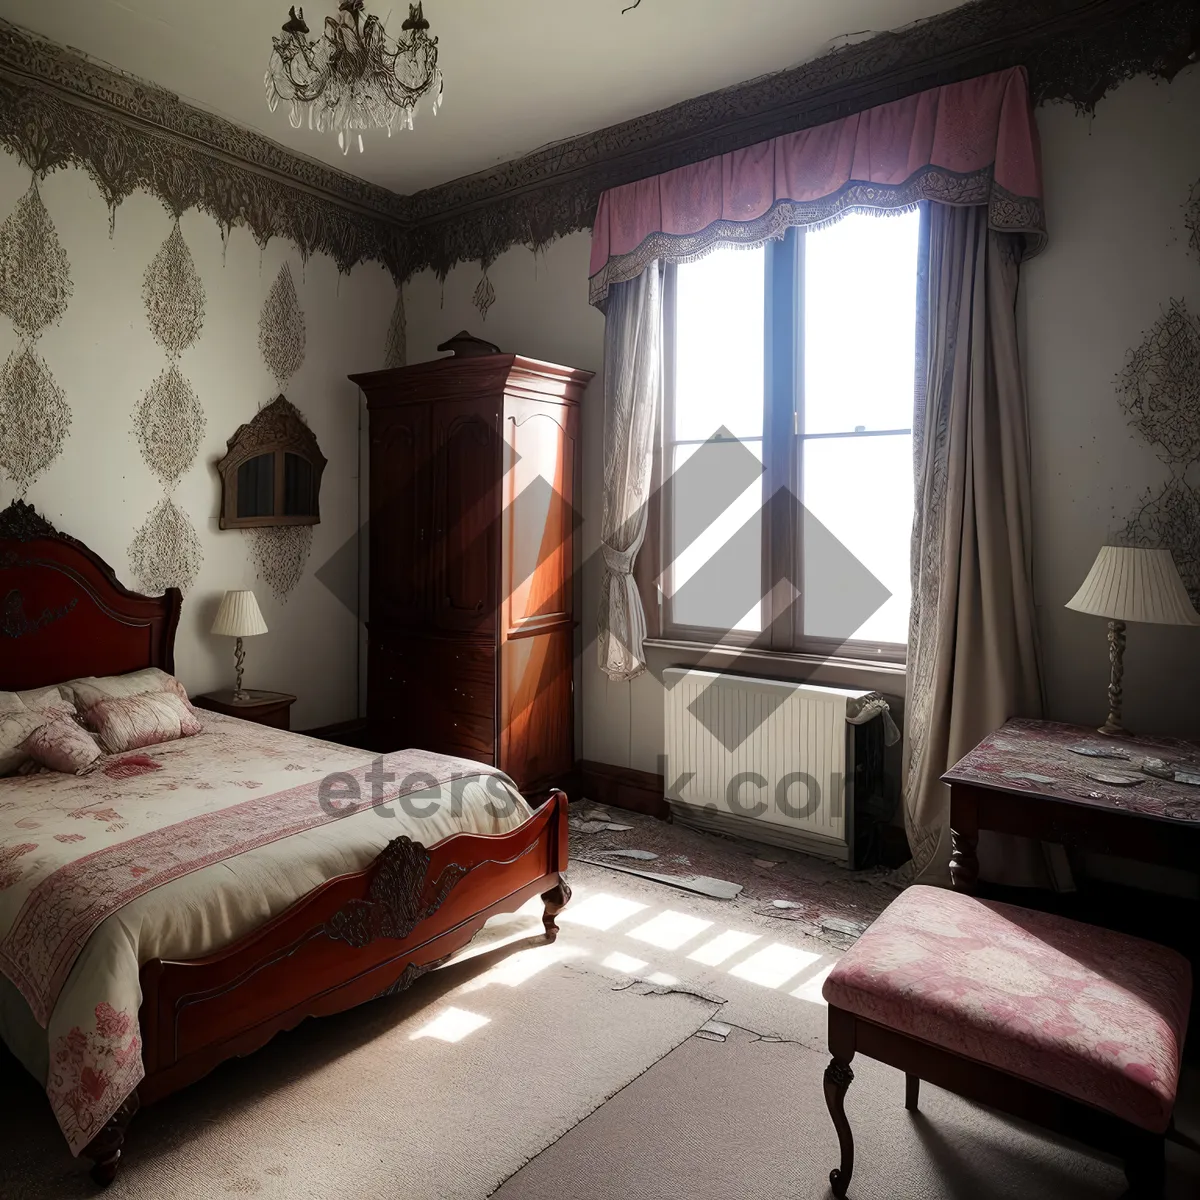 Picture of Elegant Bedroom Retreat: Luxury furniture, modern design, ultimate comfort.